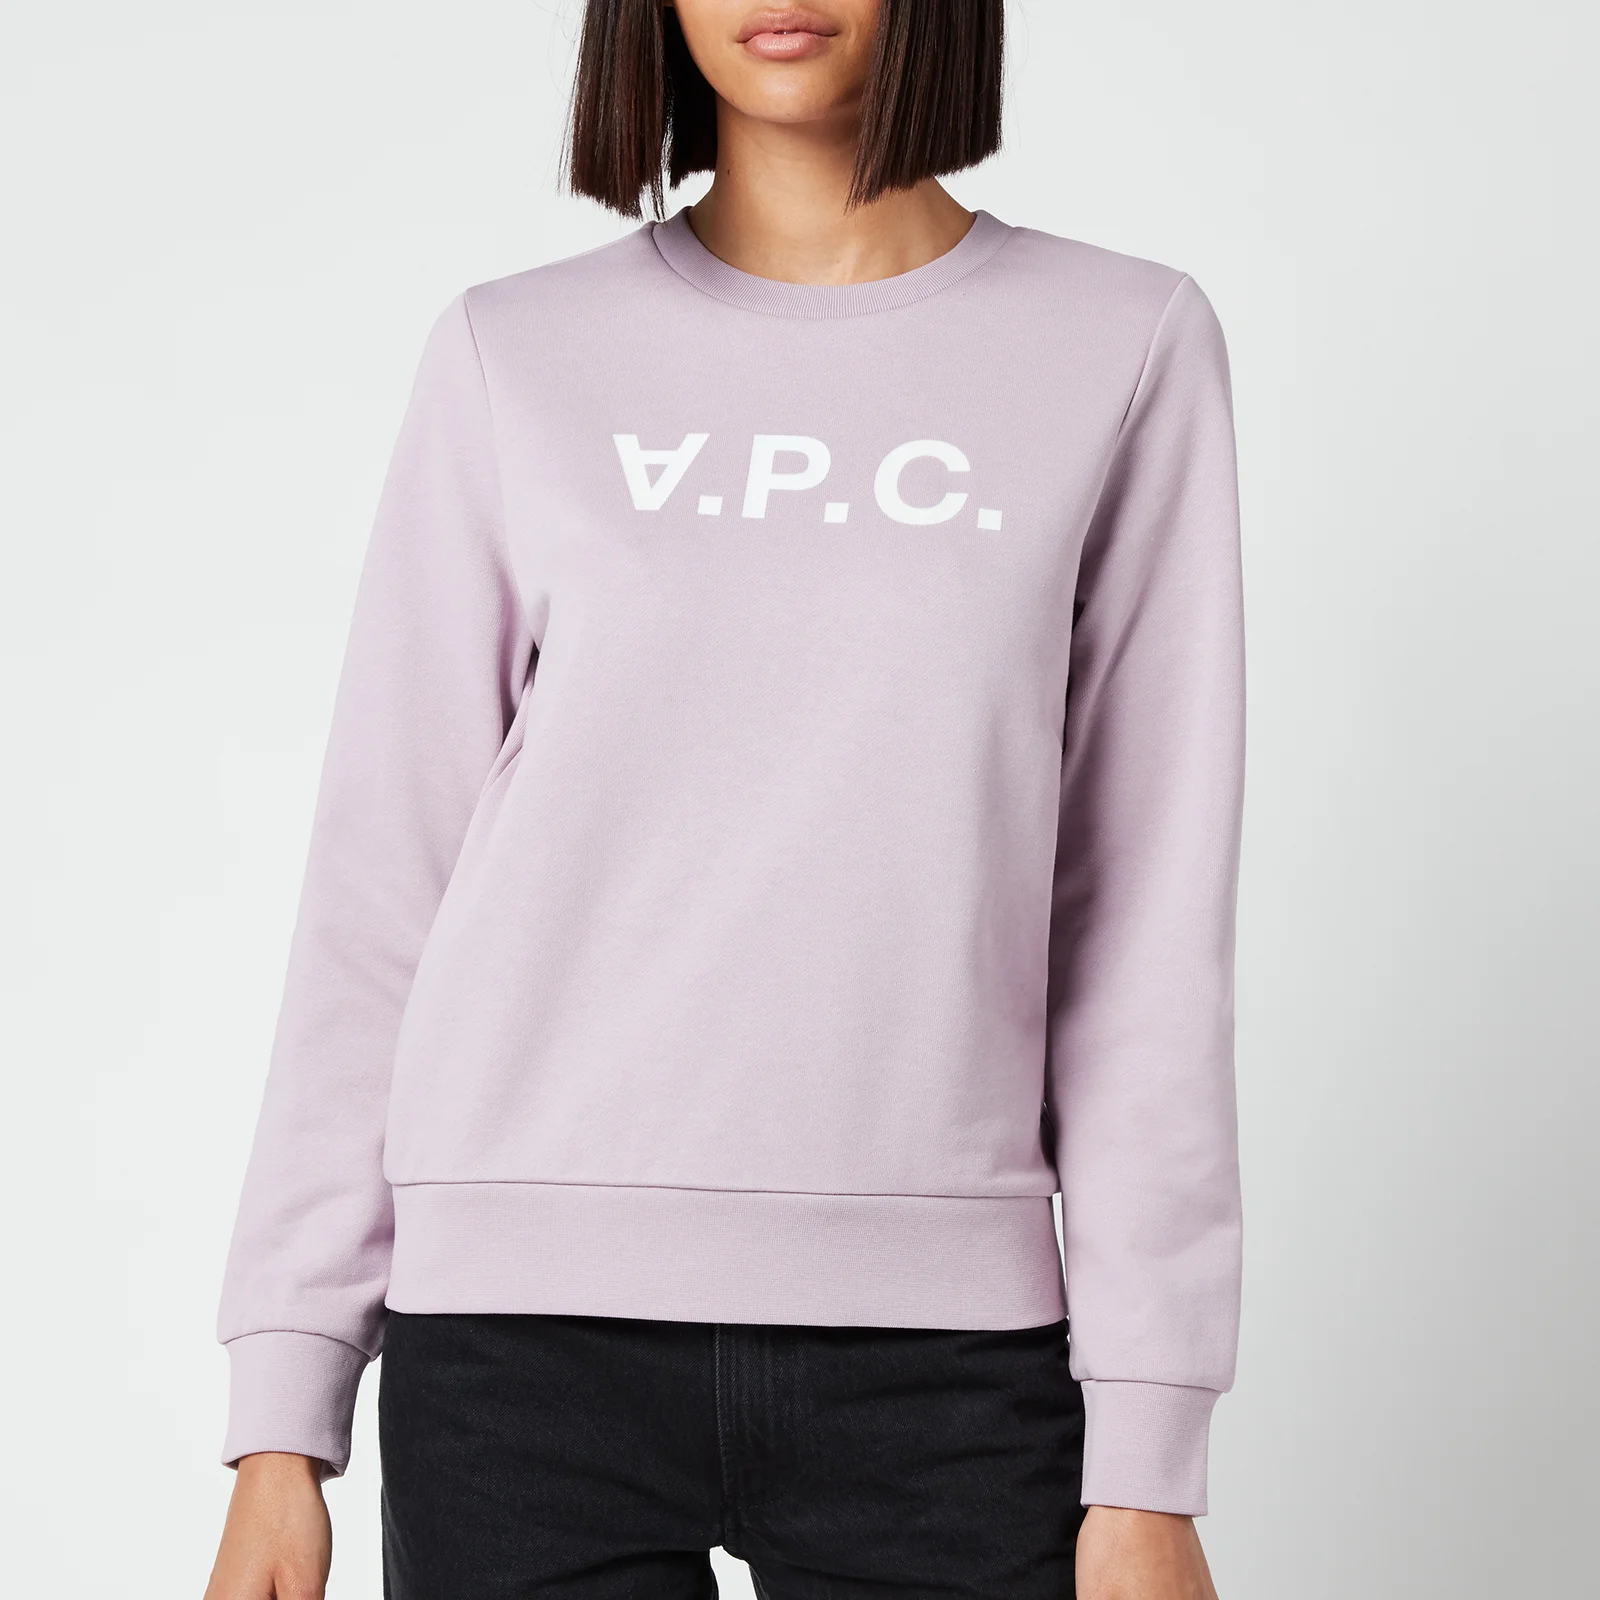 A.P.C. Women's Viva Sweatshirt - Heathered Grey Image 1